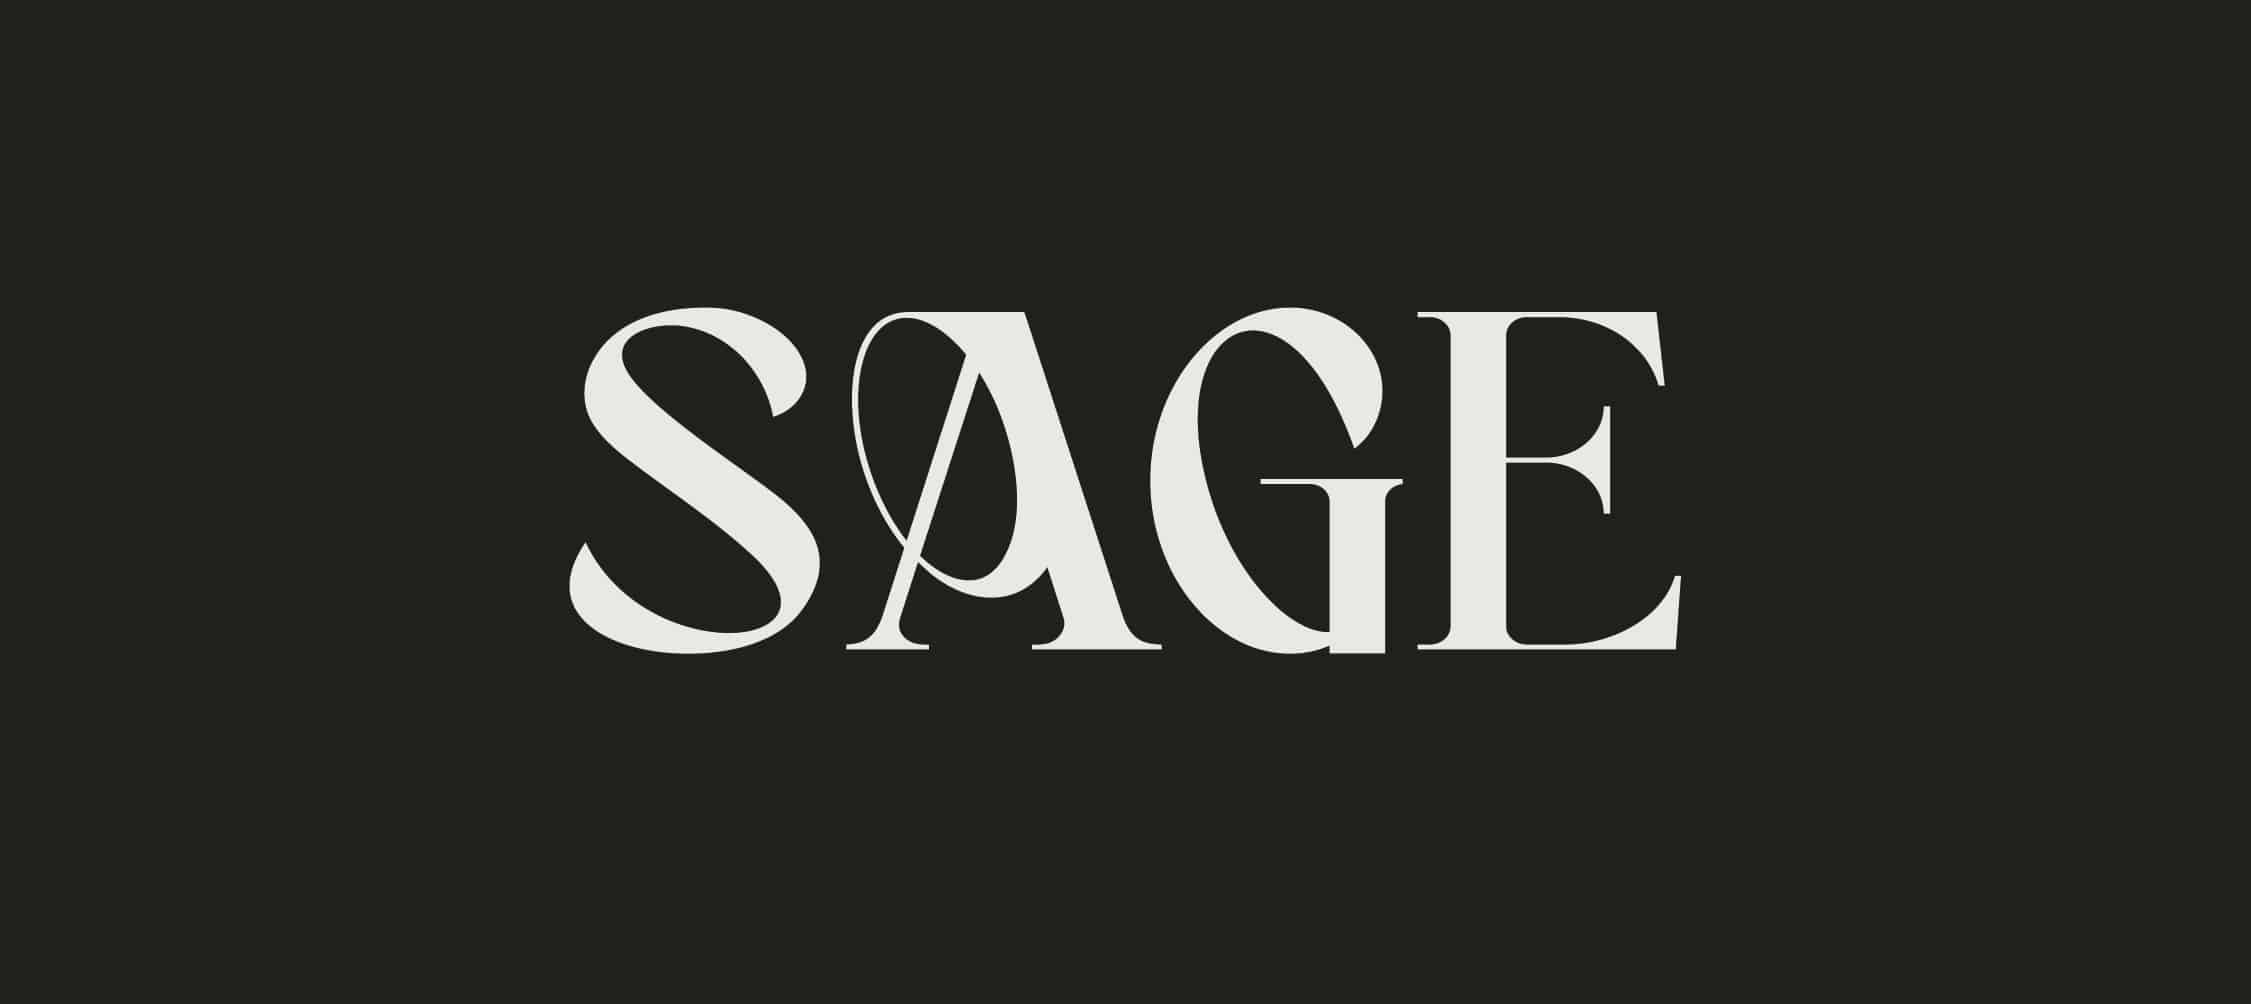 Sage Gracie Logo Design By Stellen Design Branding Agency in Los Angeles California